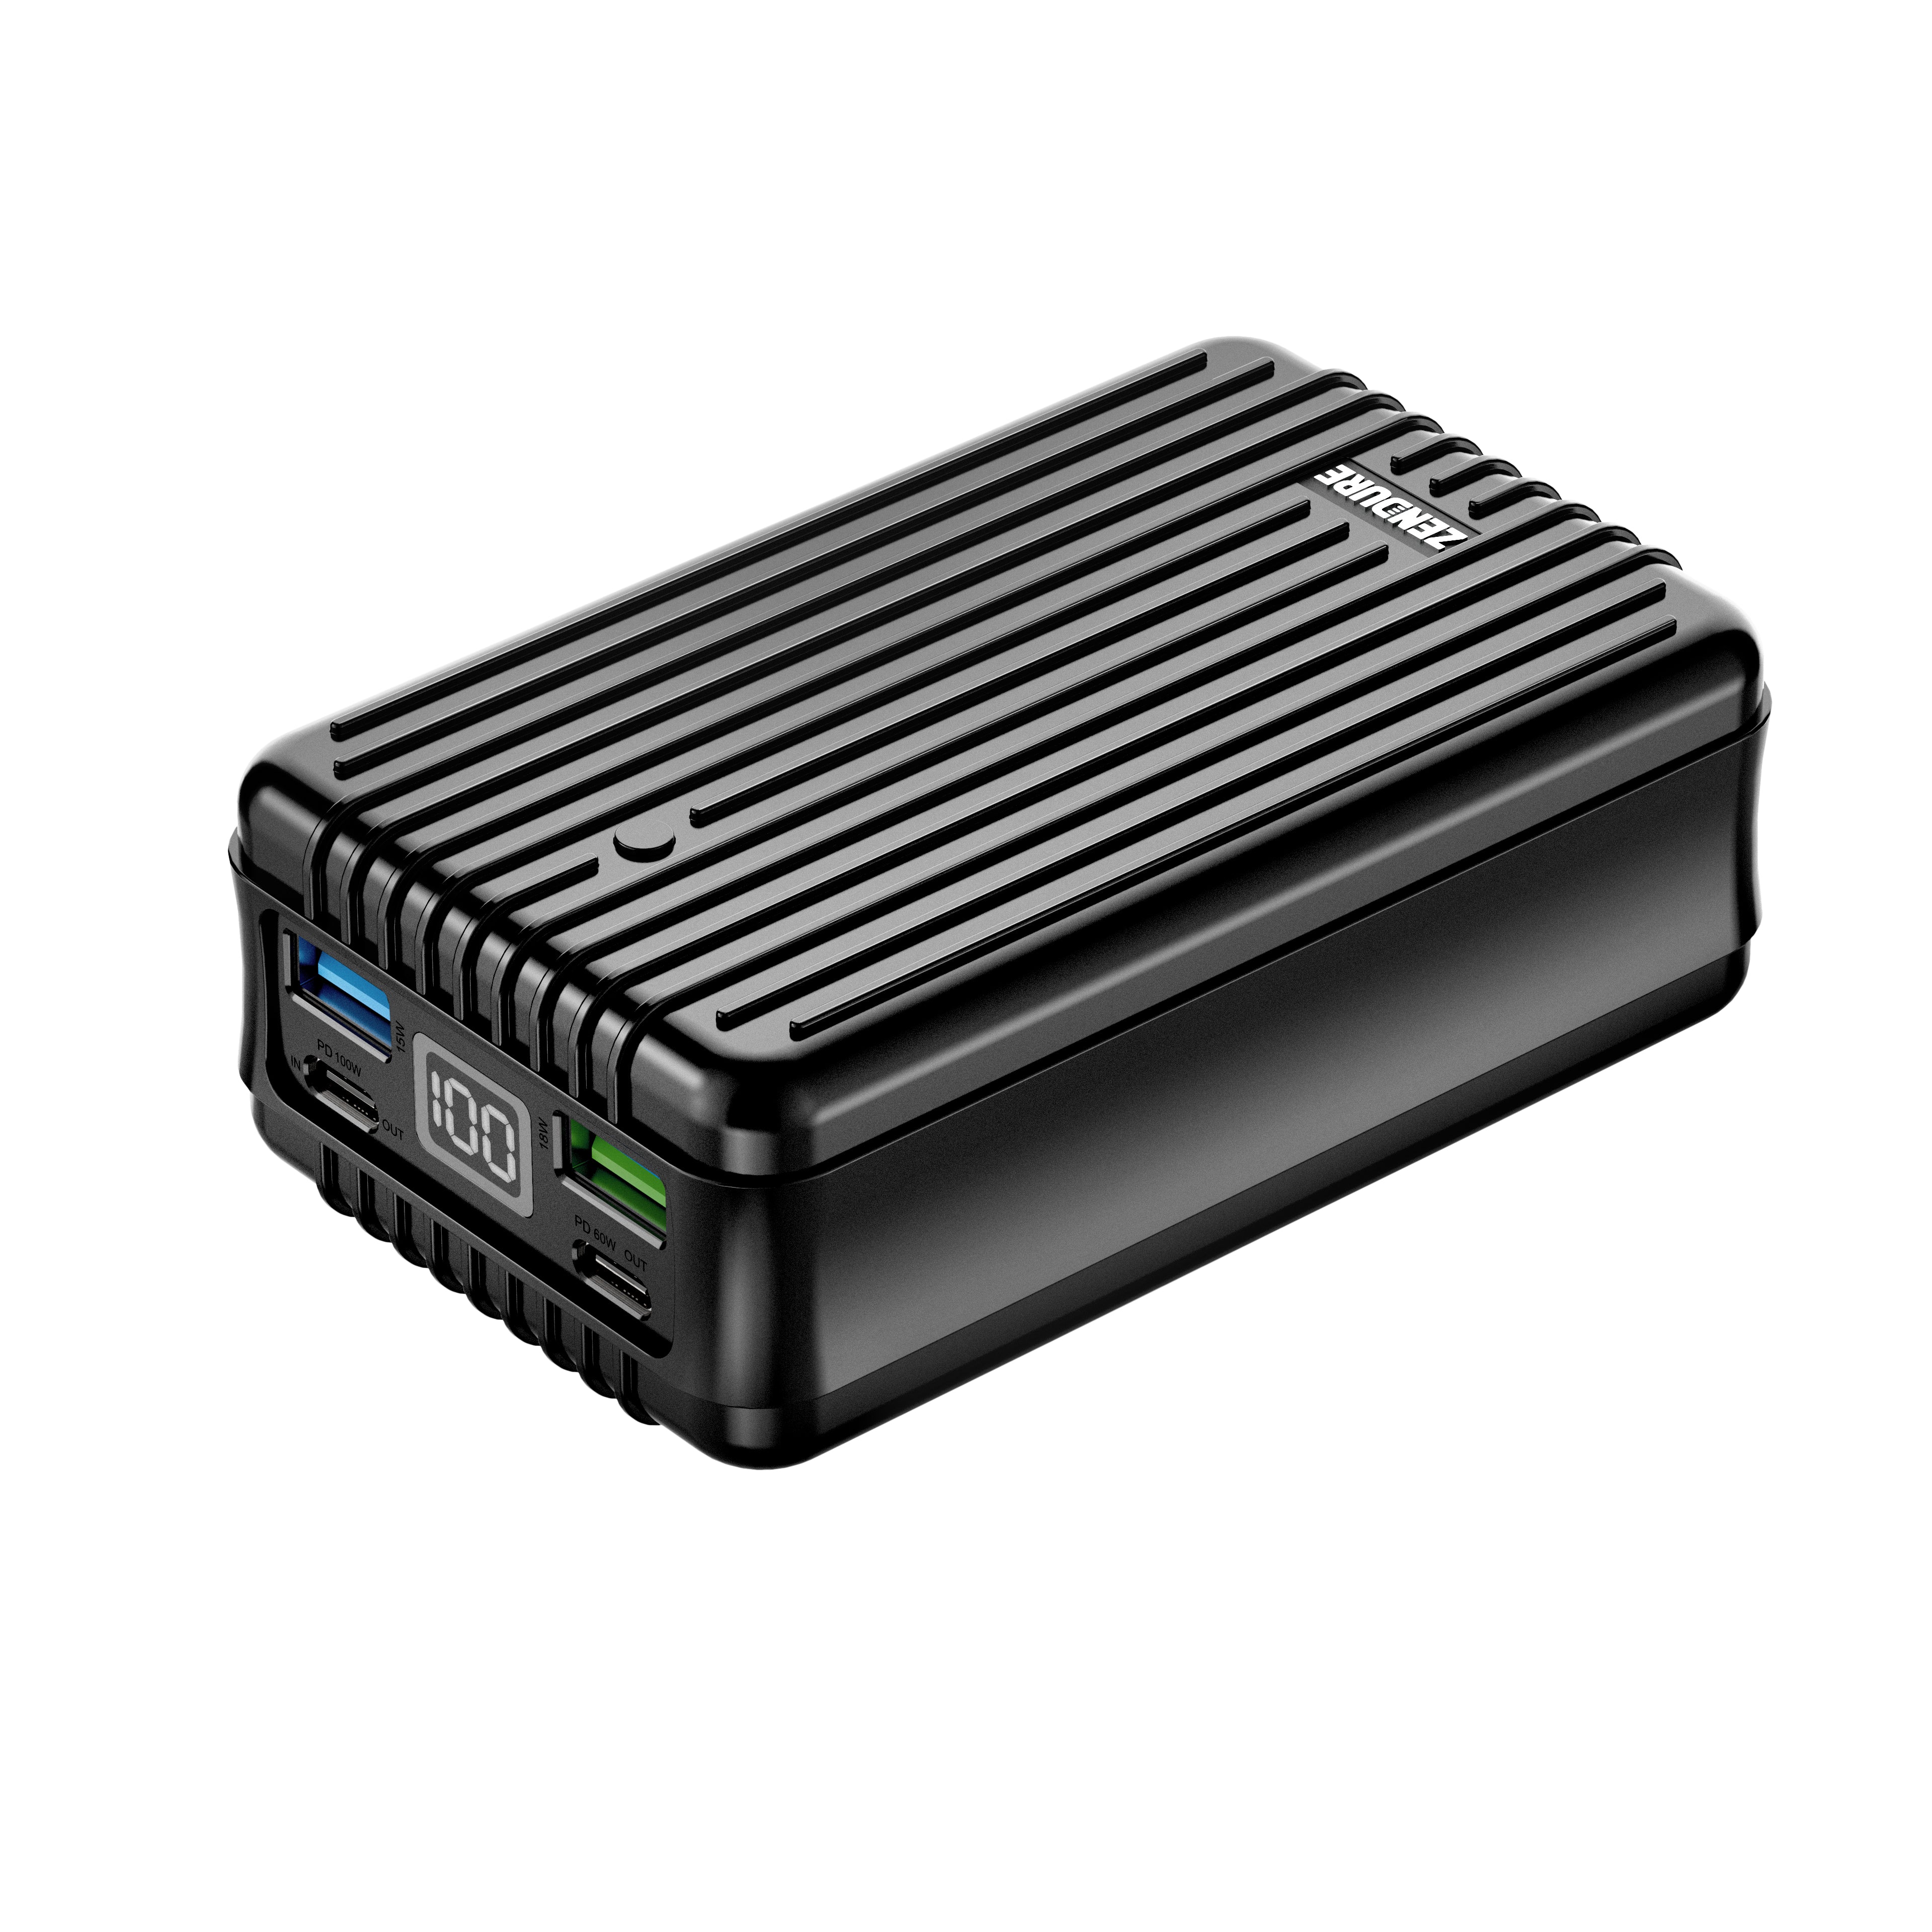 SuperTank USB-C PD Portable Charger, 27,000mAh - Black